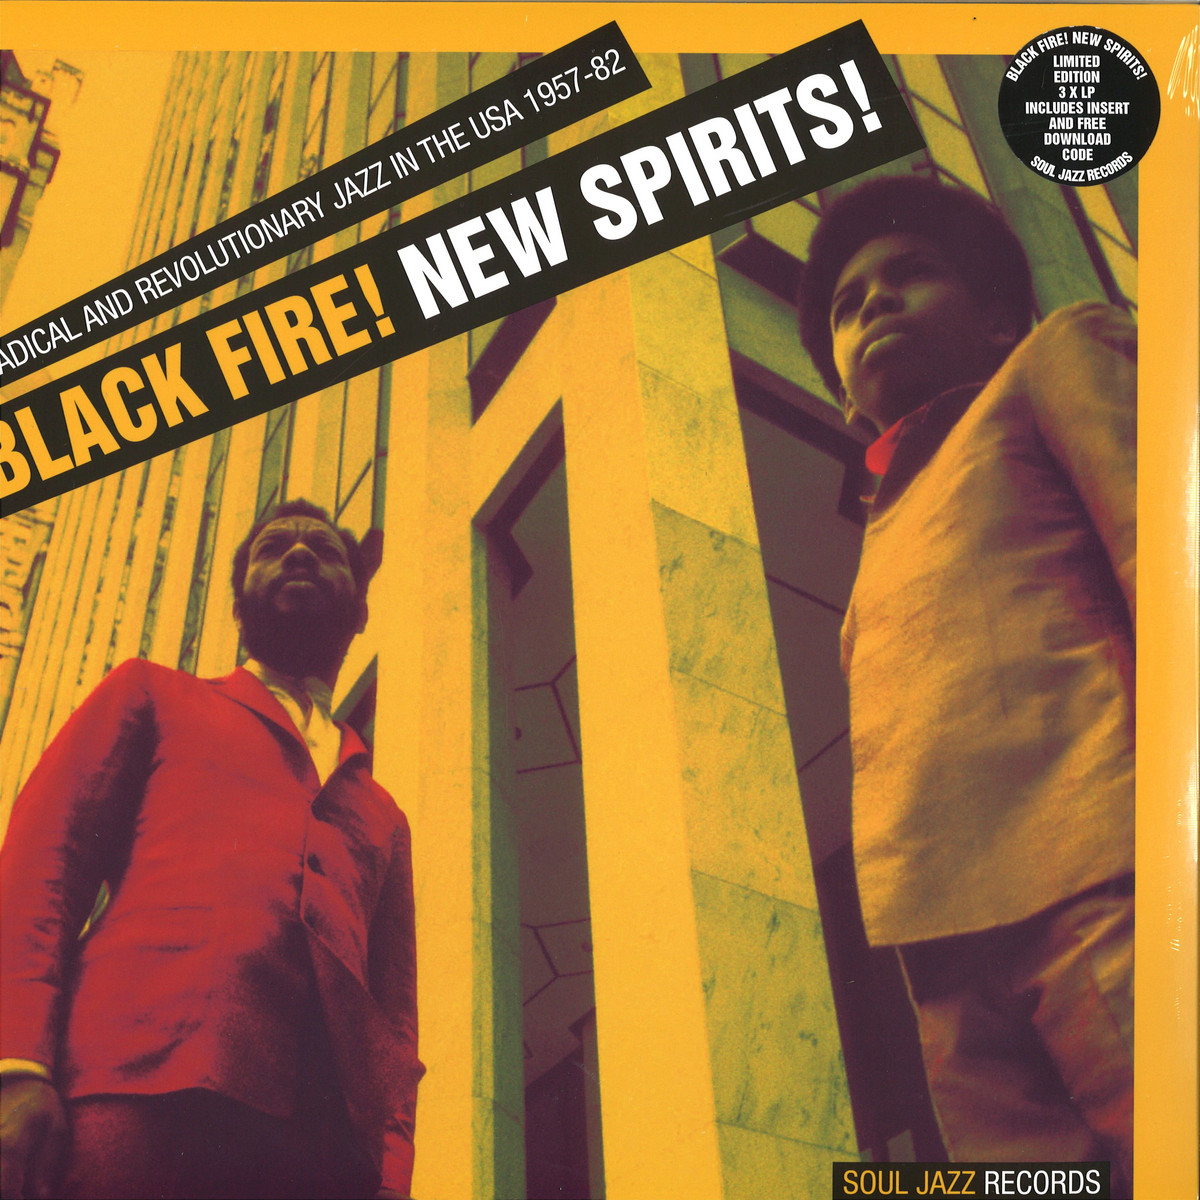 Soul Jazz Records Presents - Black Fire! New Spirits! / Soul Jazz Records  SJRLP288 - Vinyl